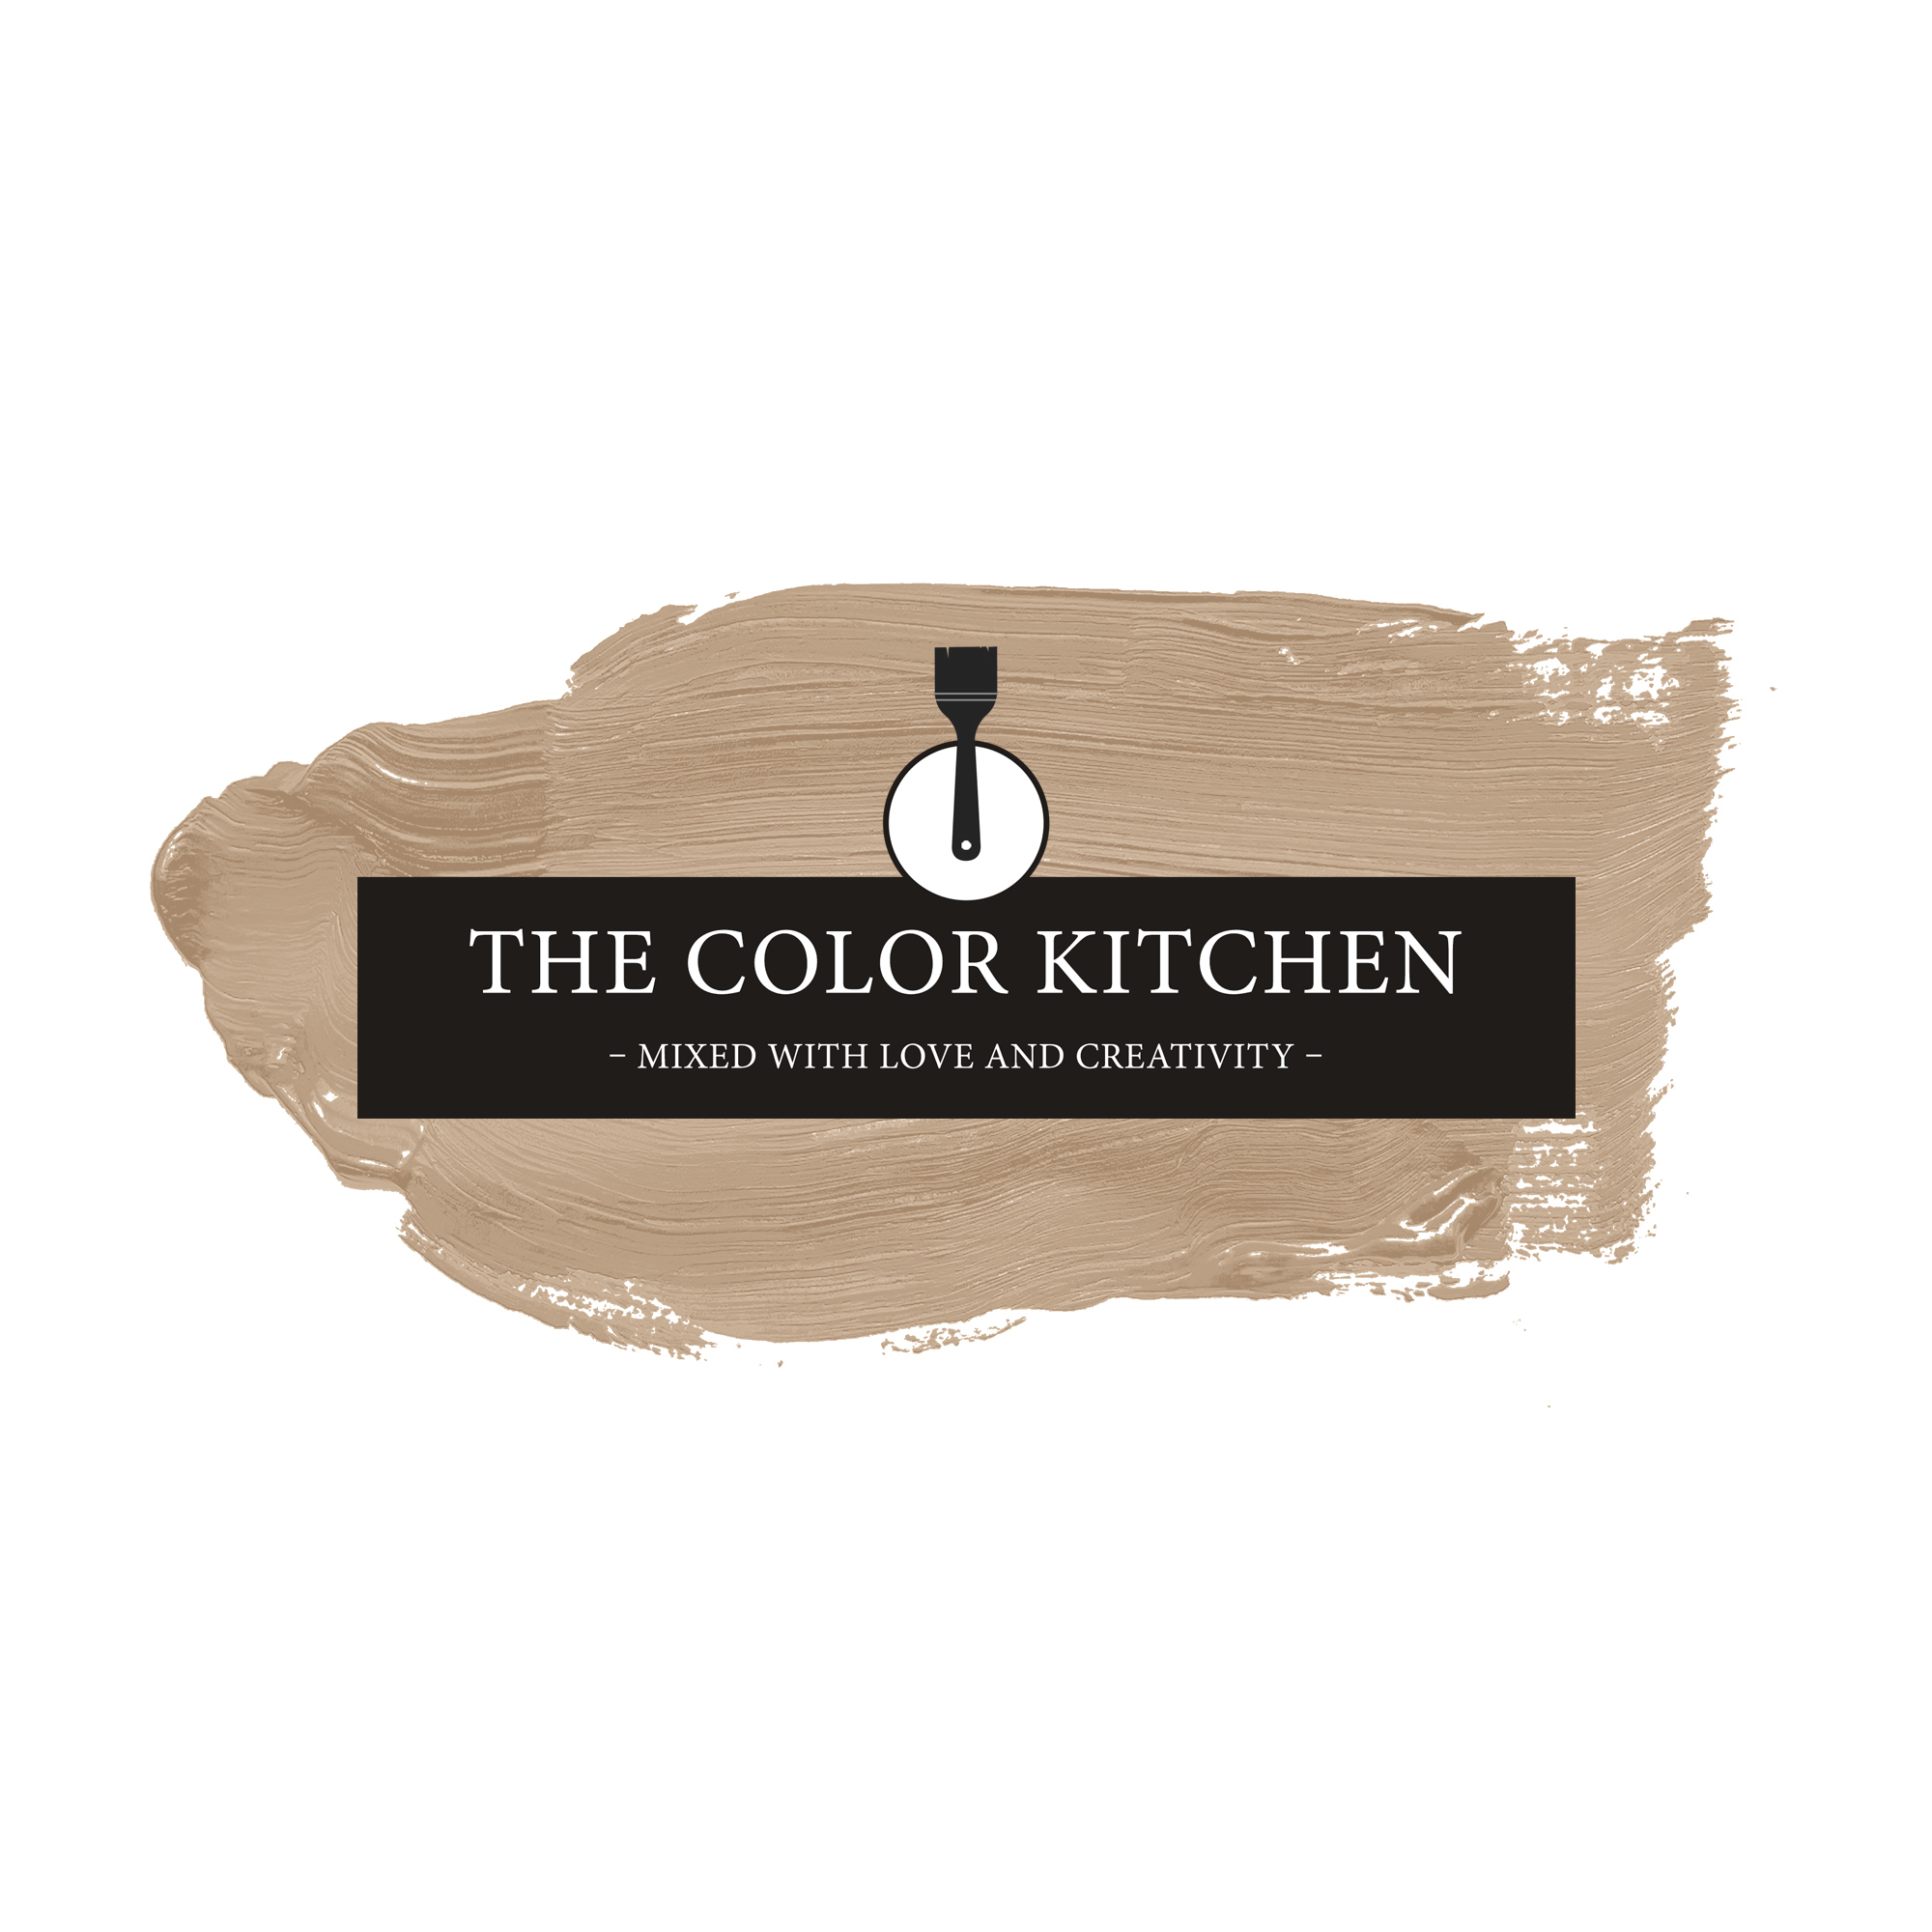 The Color Kitchen Friendly Fennel 5 l